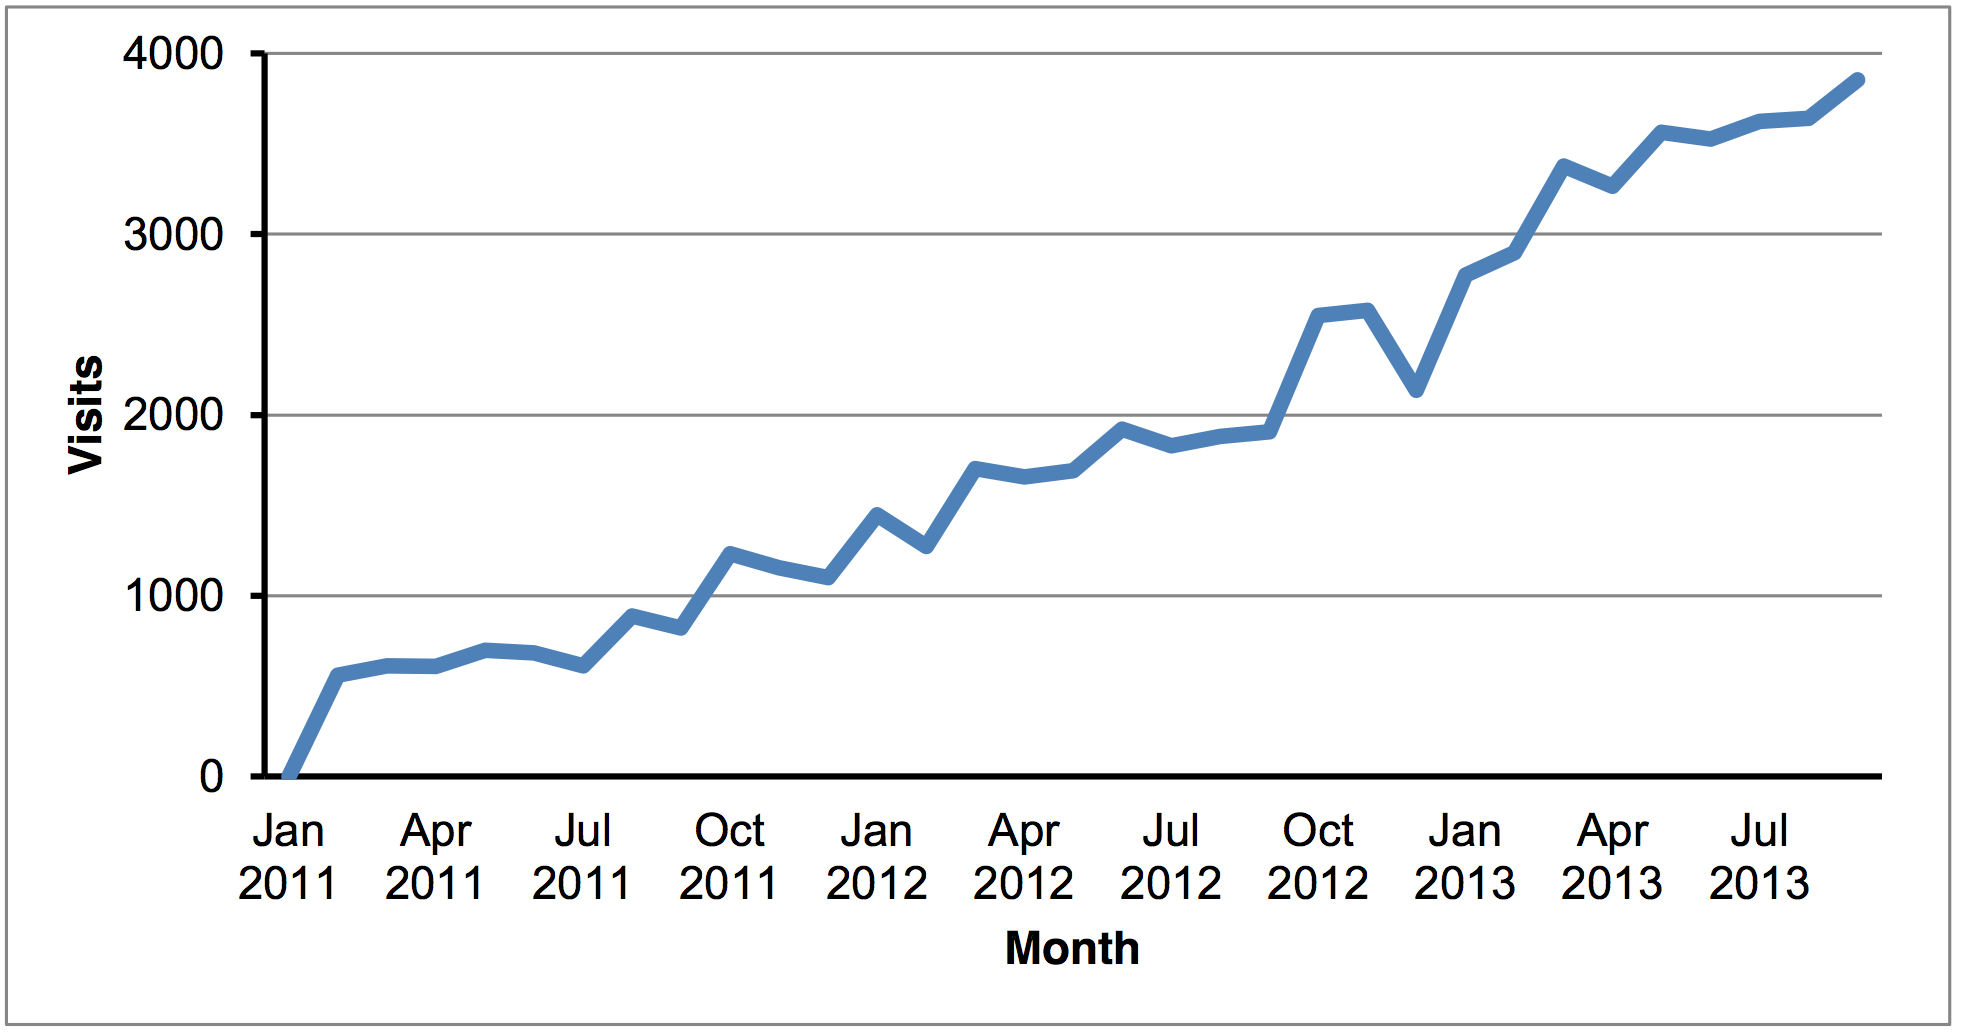 Monthly web usage statistics for the PREDICT website, Jan 2011-Jul 2013